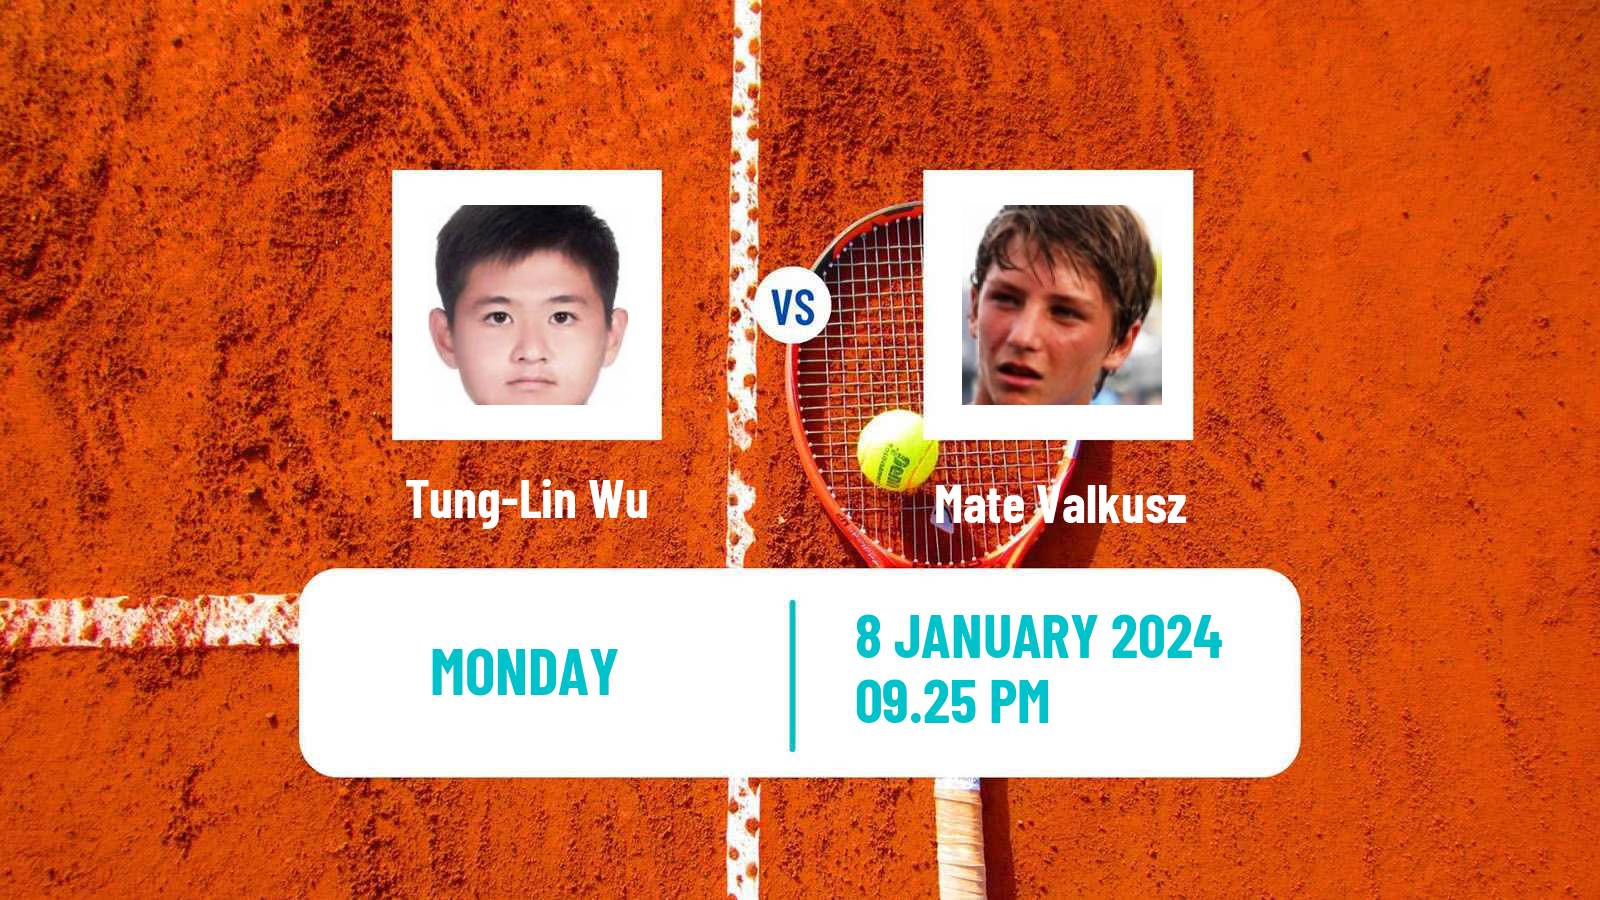 Tennis ATP Australian Open Tung-Lin Wu - Mate Valkusz